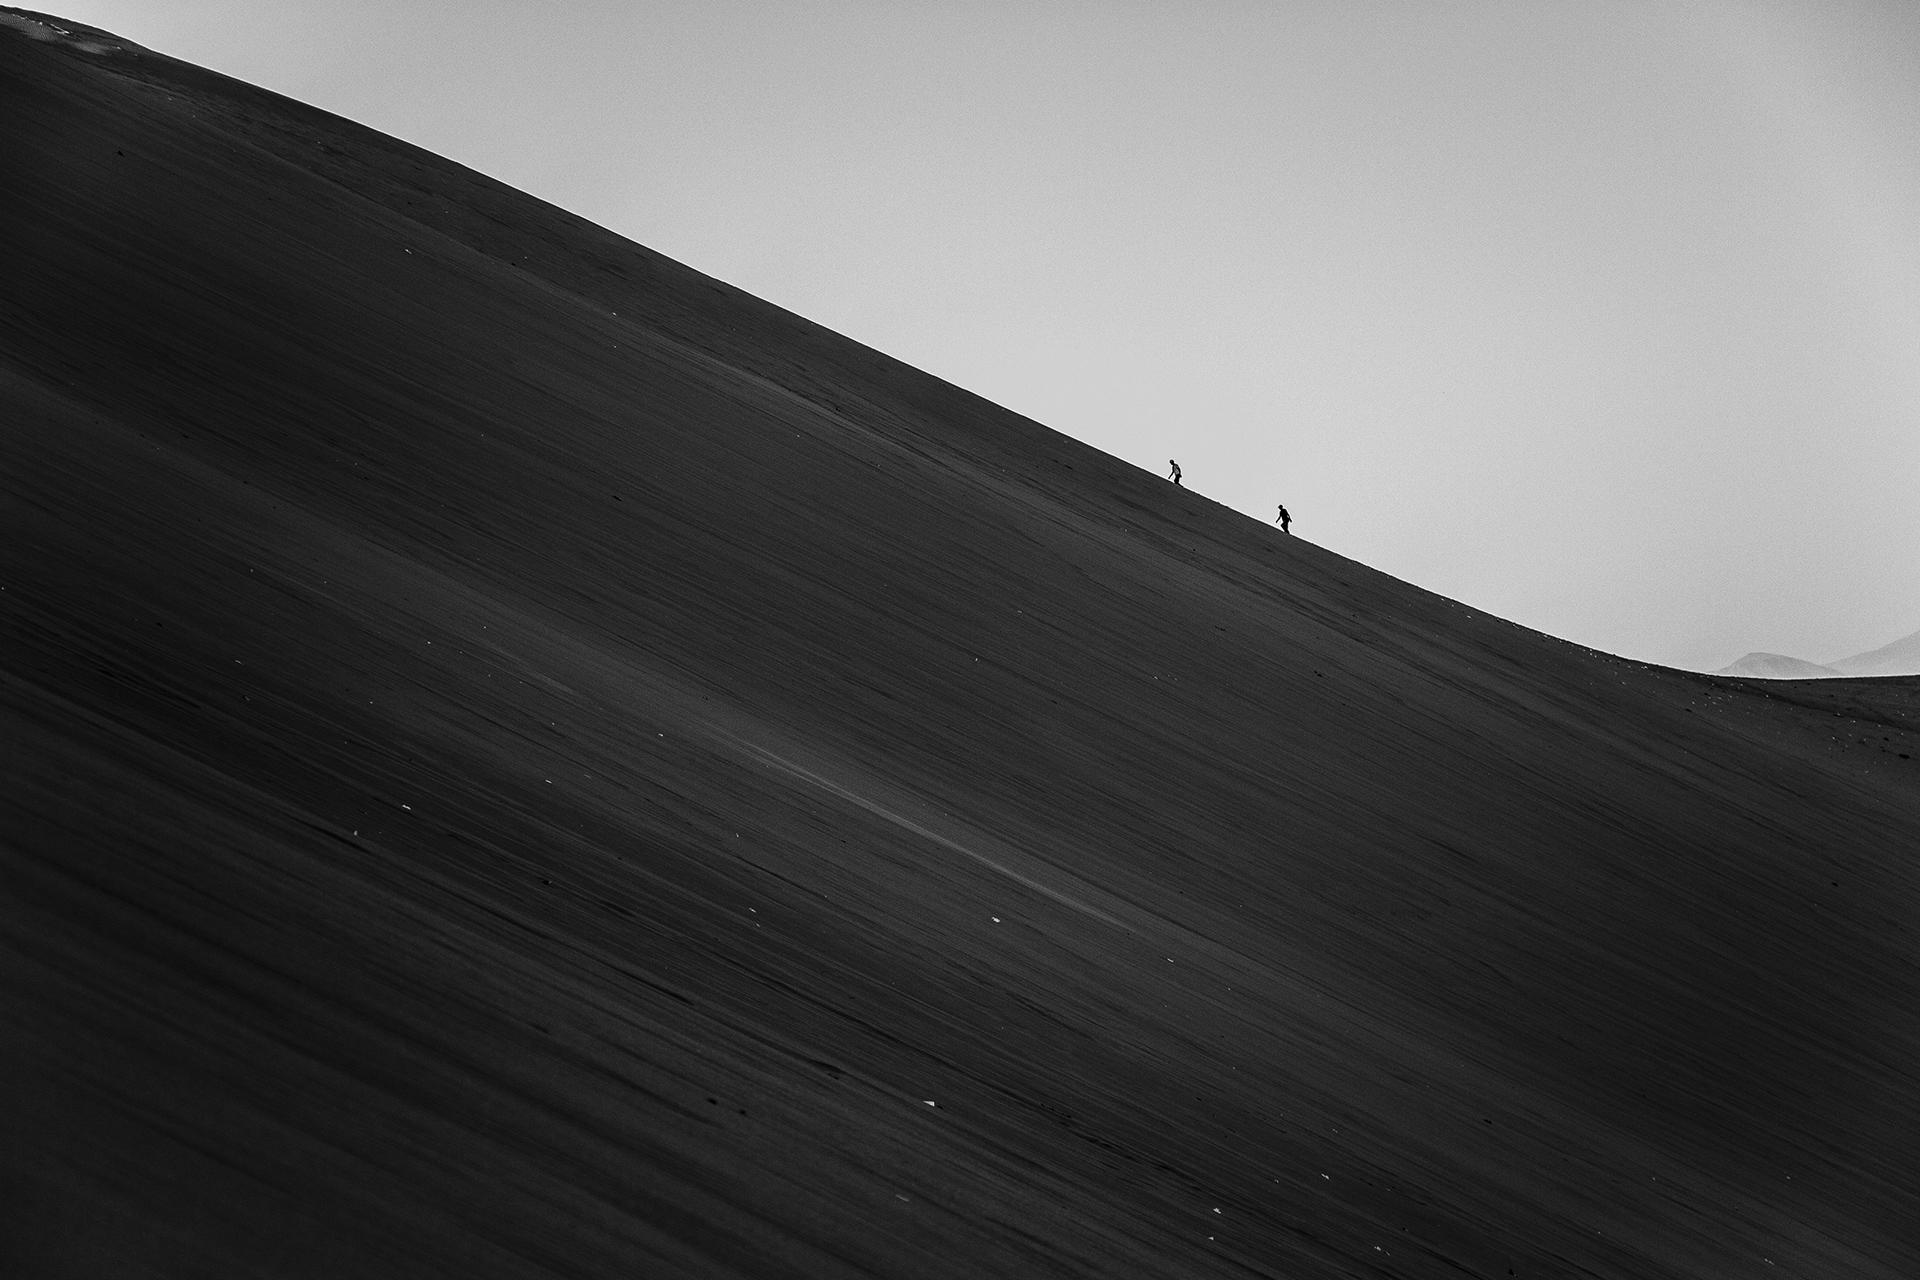 Black & White Photography: Exploring Huacachina Lines